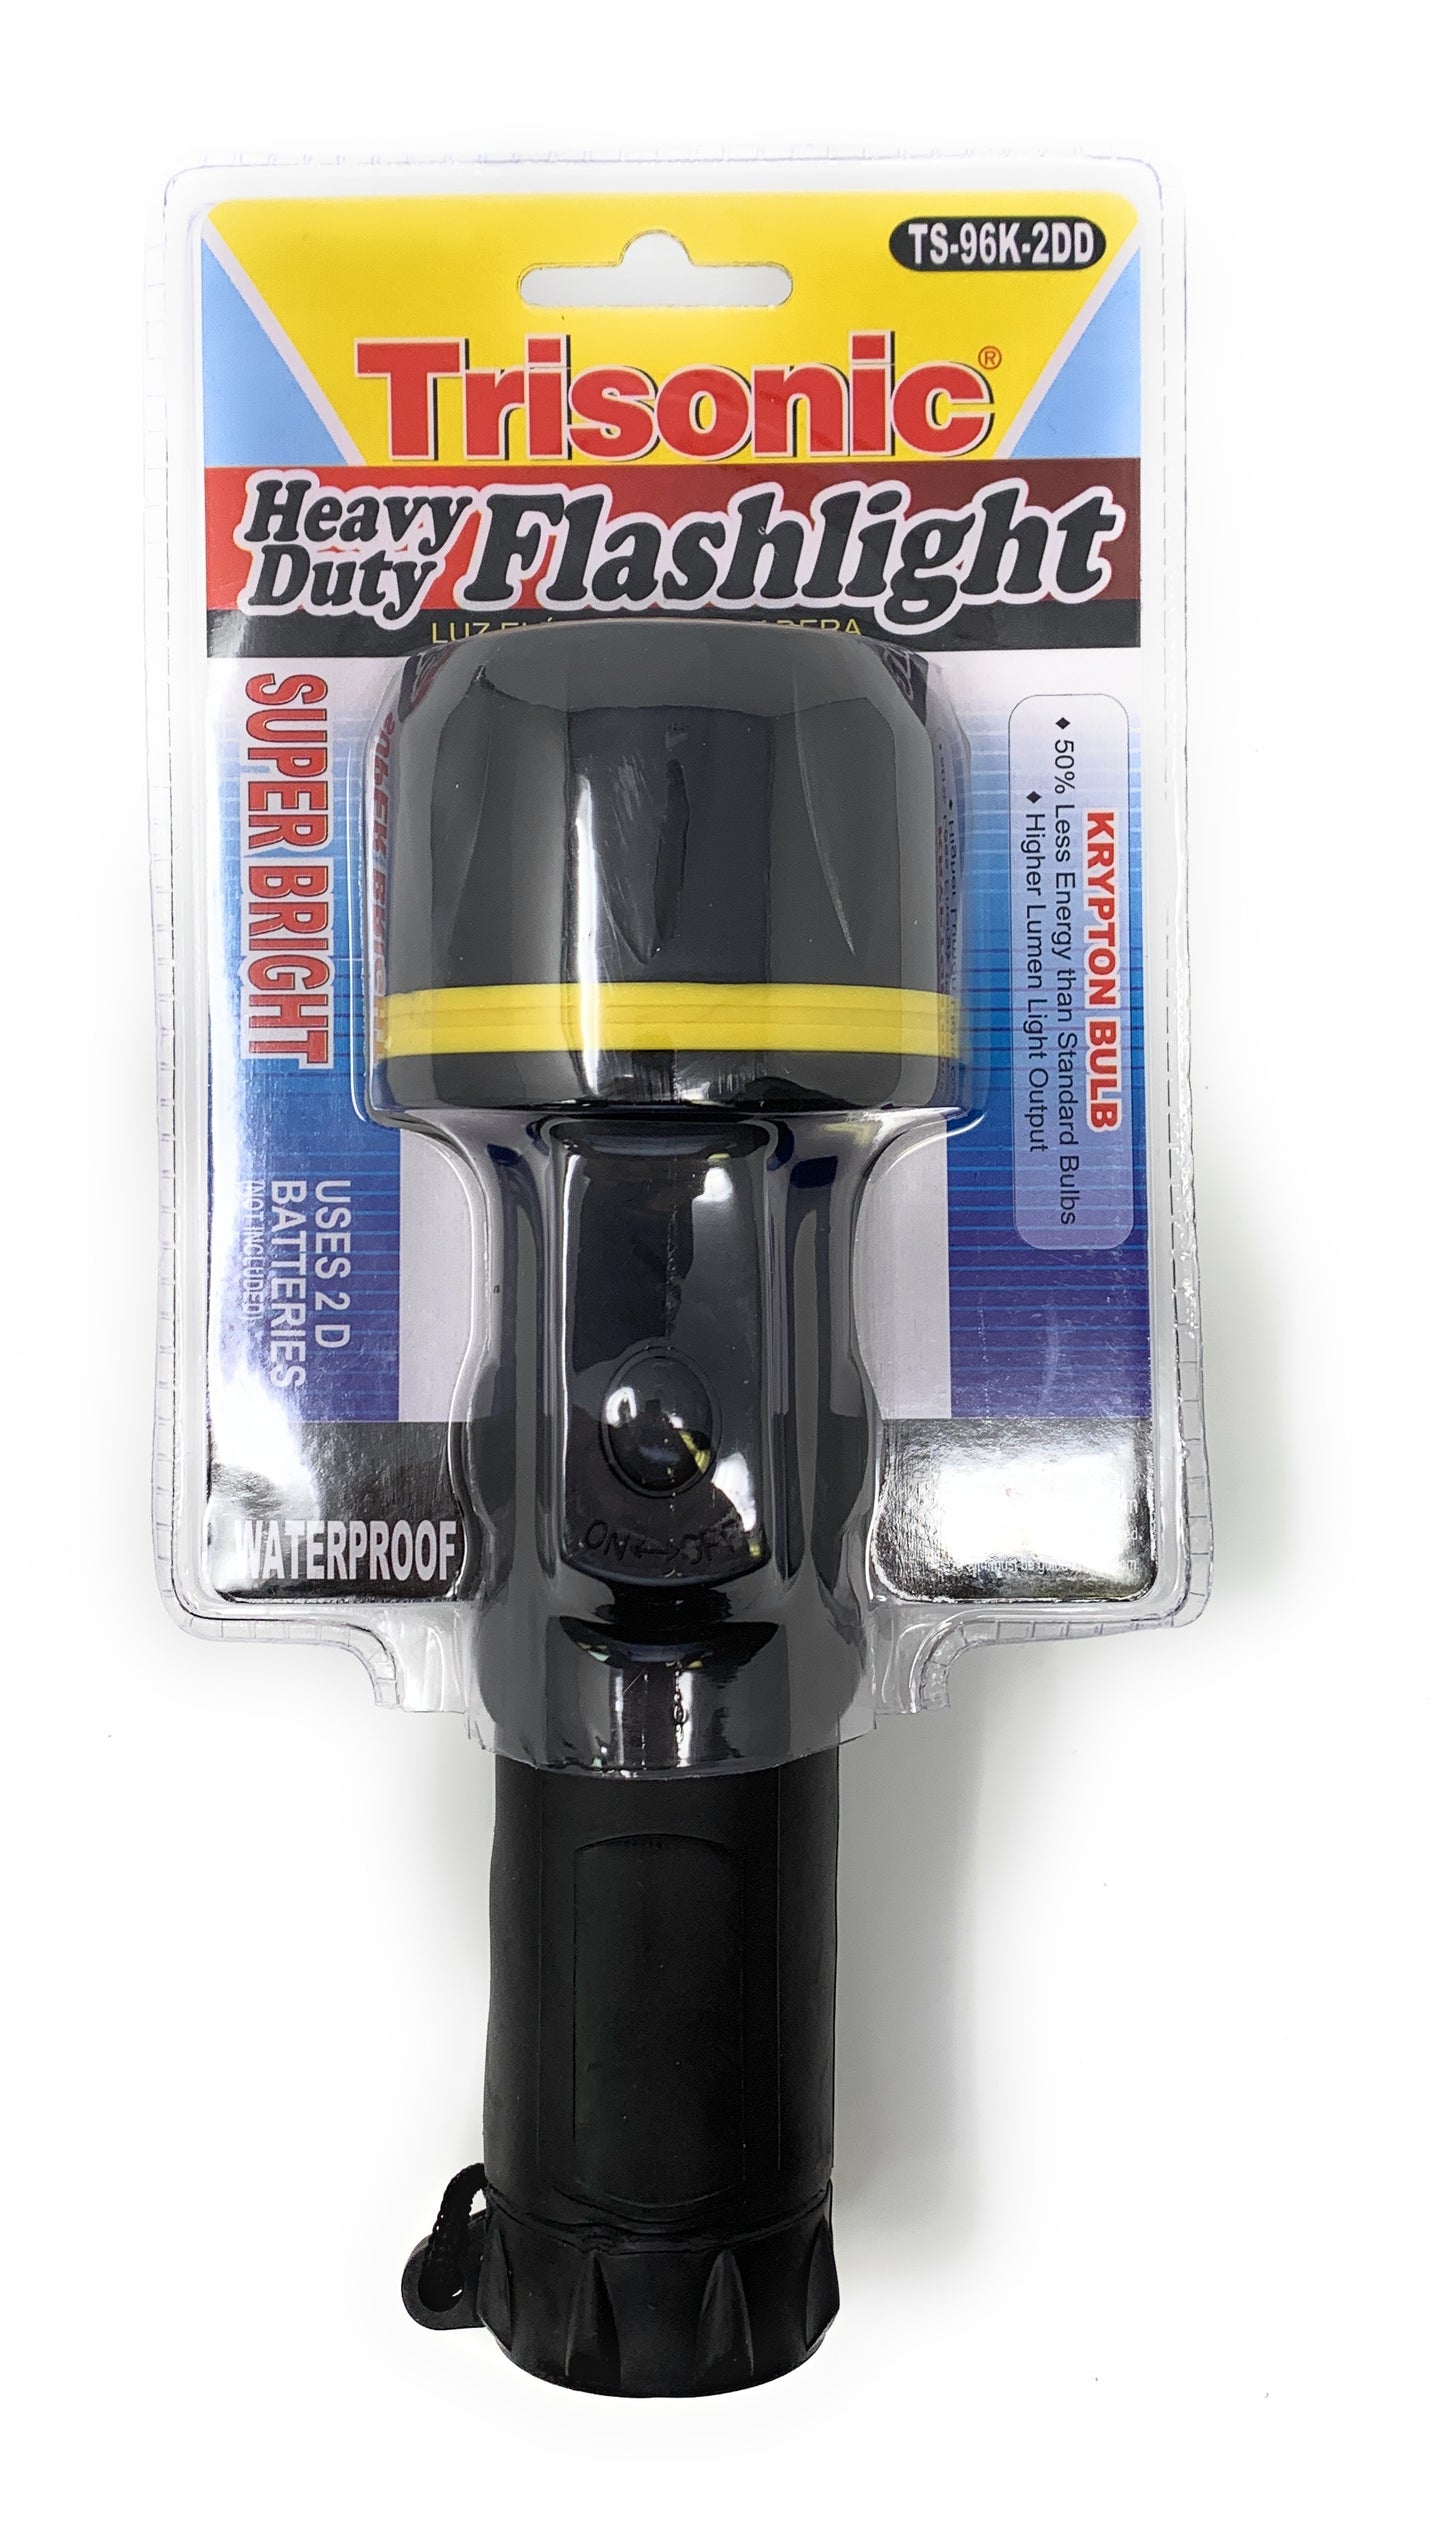 Heavy Duty Torch Krypton Bulb 2D Flashlight Higher Lumener light output